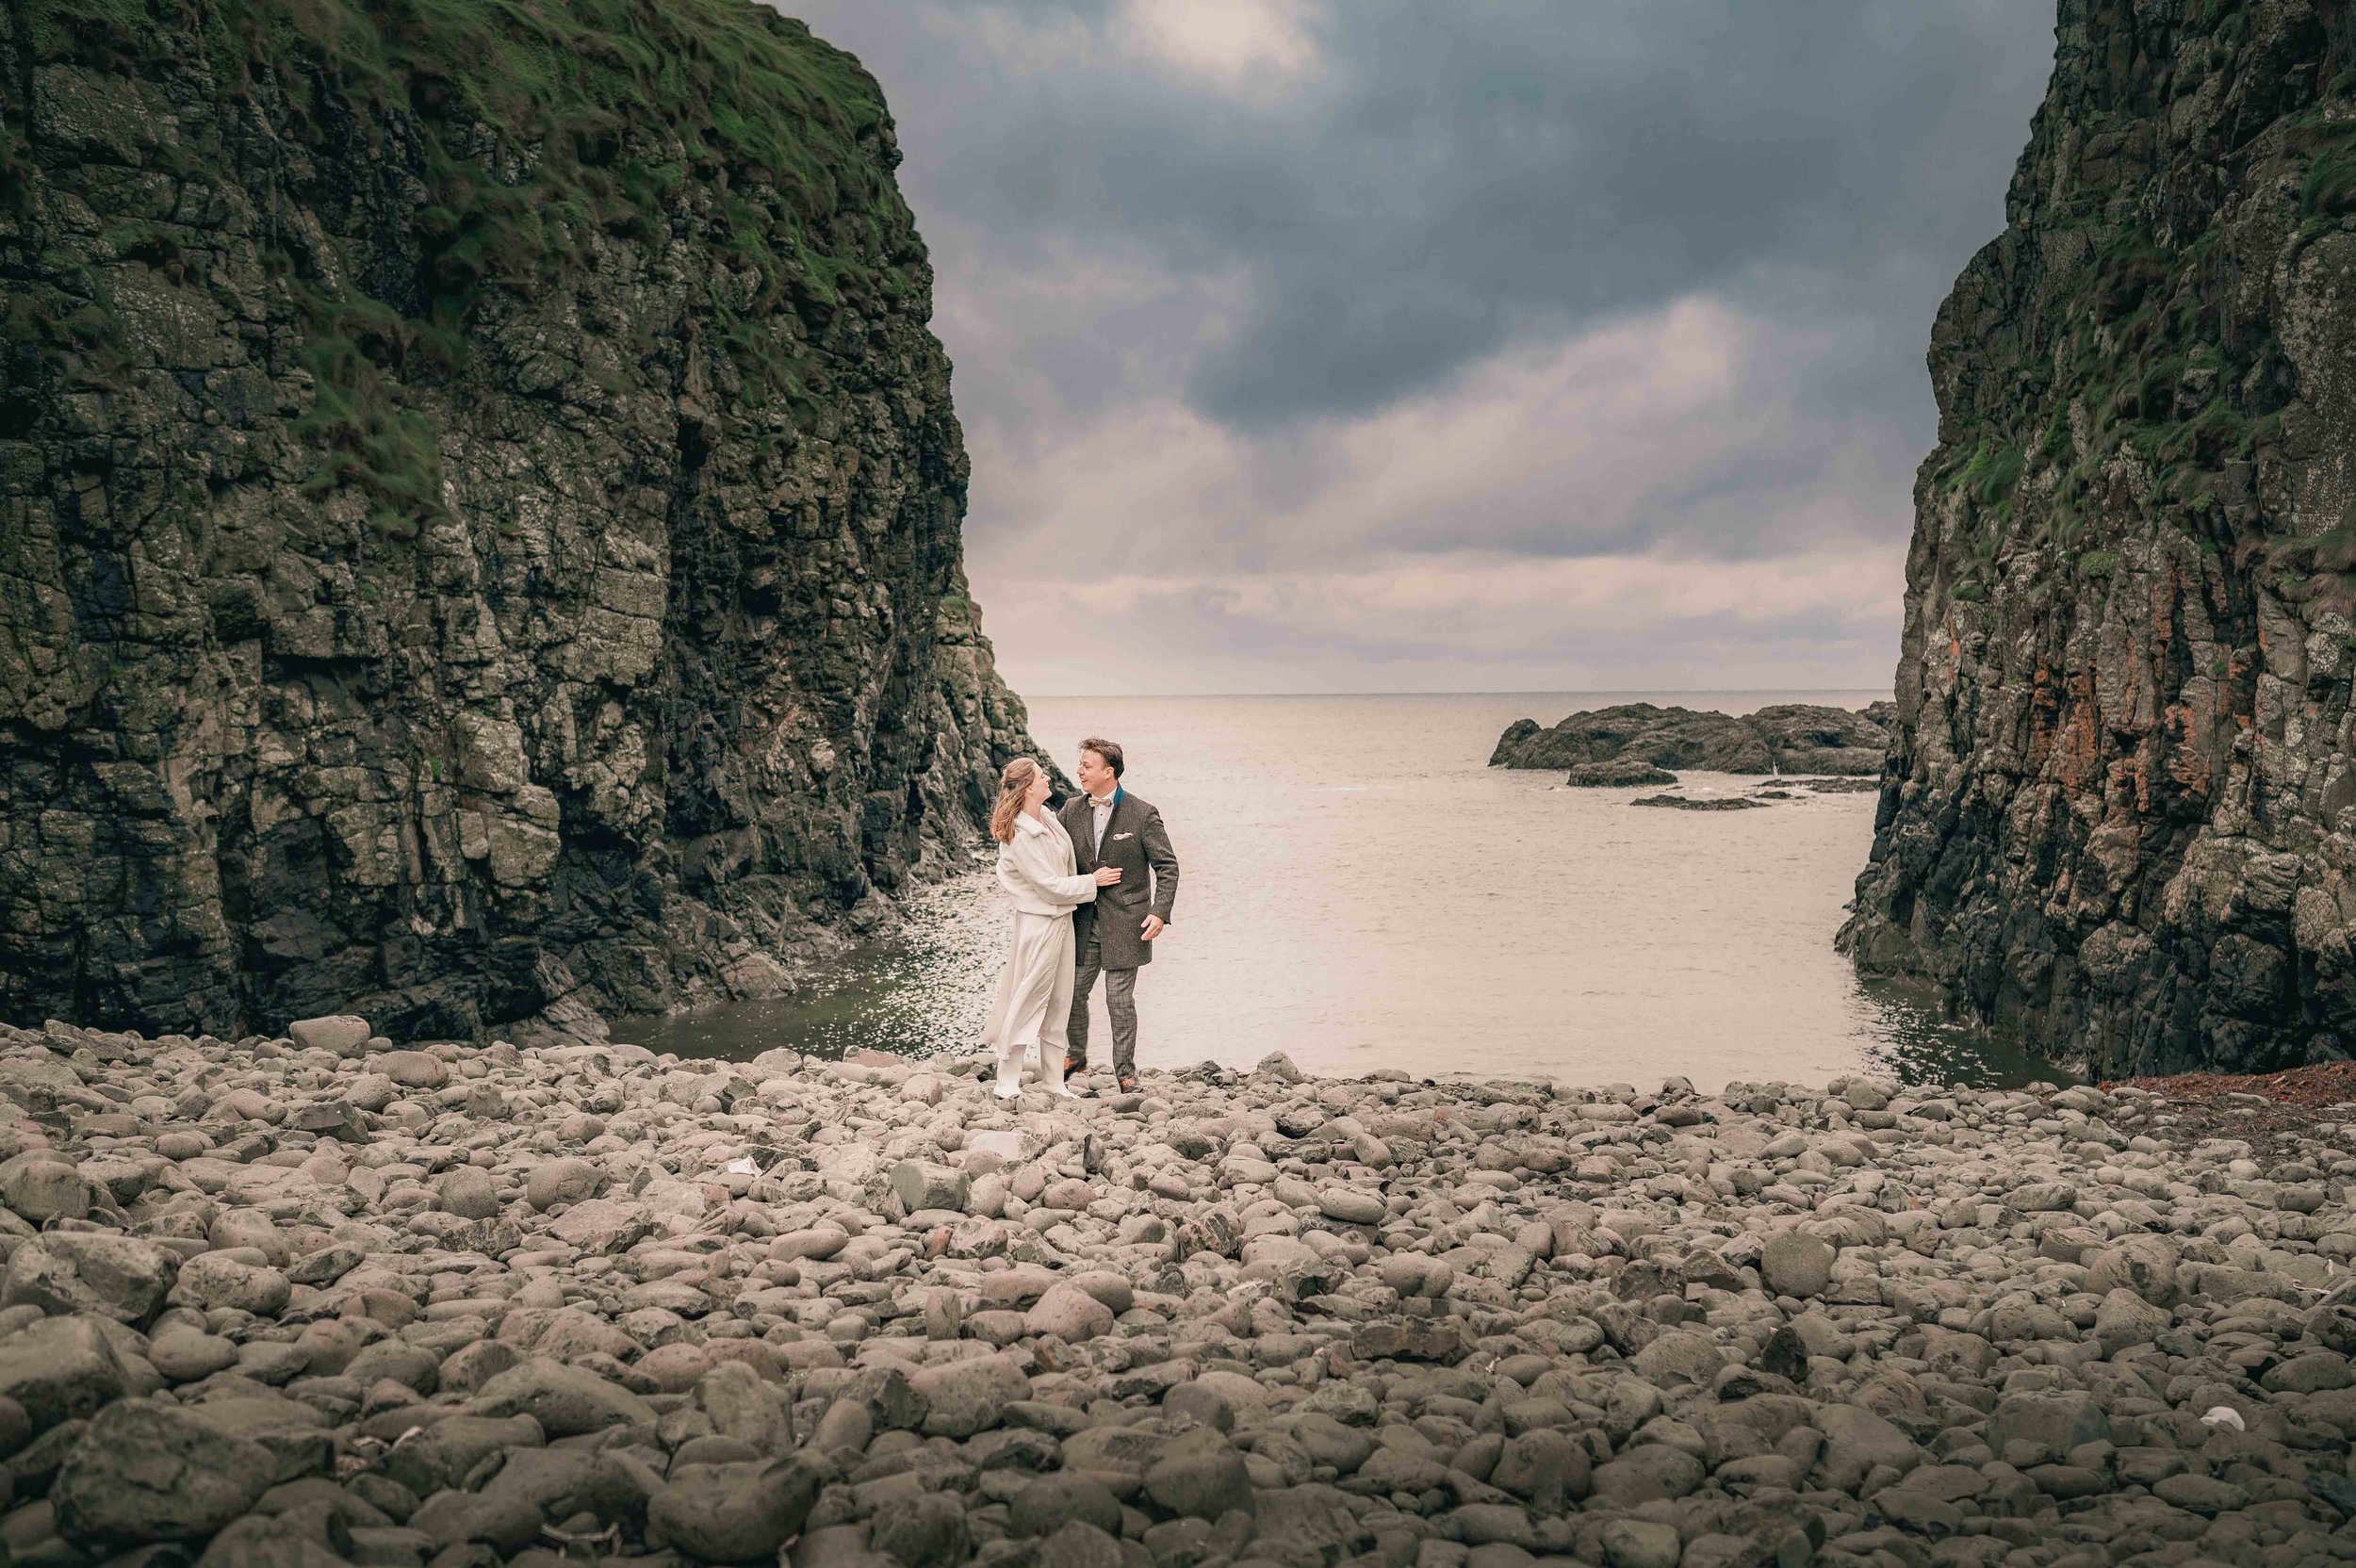 Christopher_James_Photography_Northern_Ireland_Bride_&_groom_beach_elopement.jpg